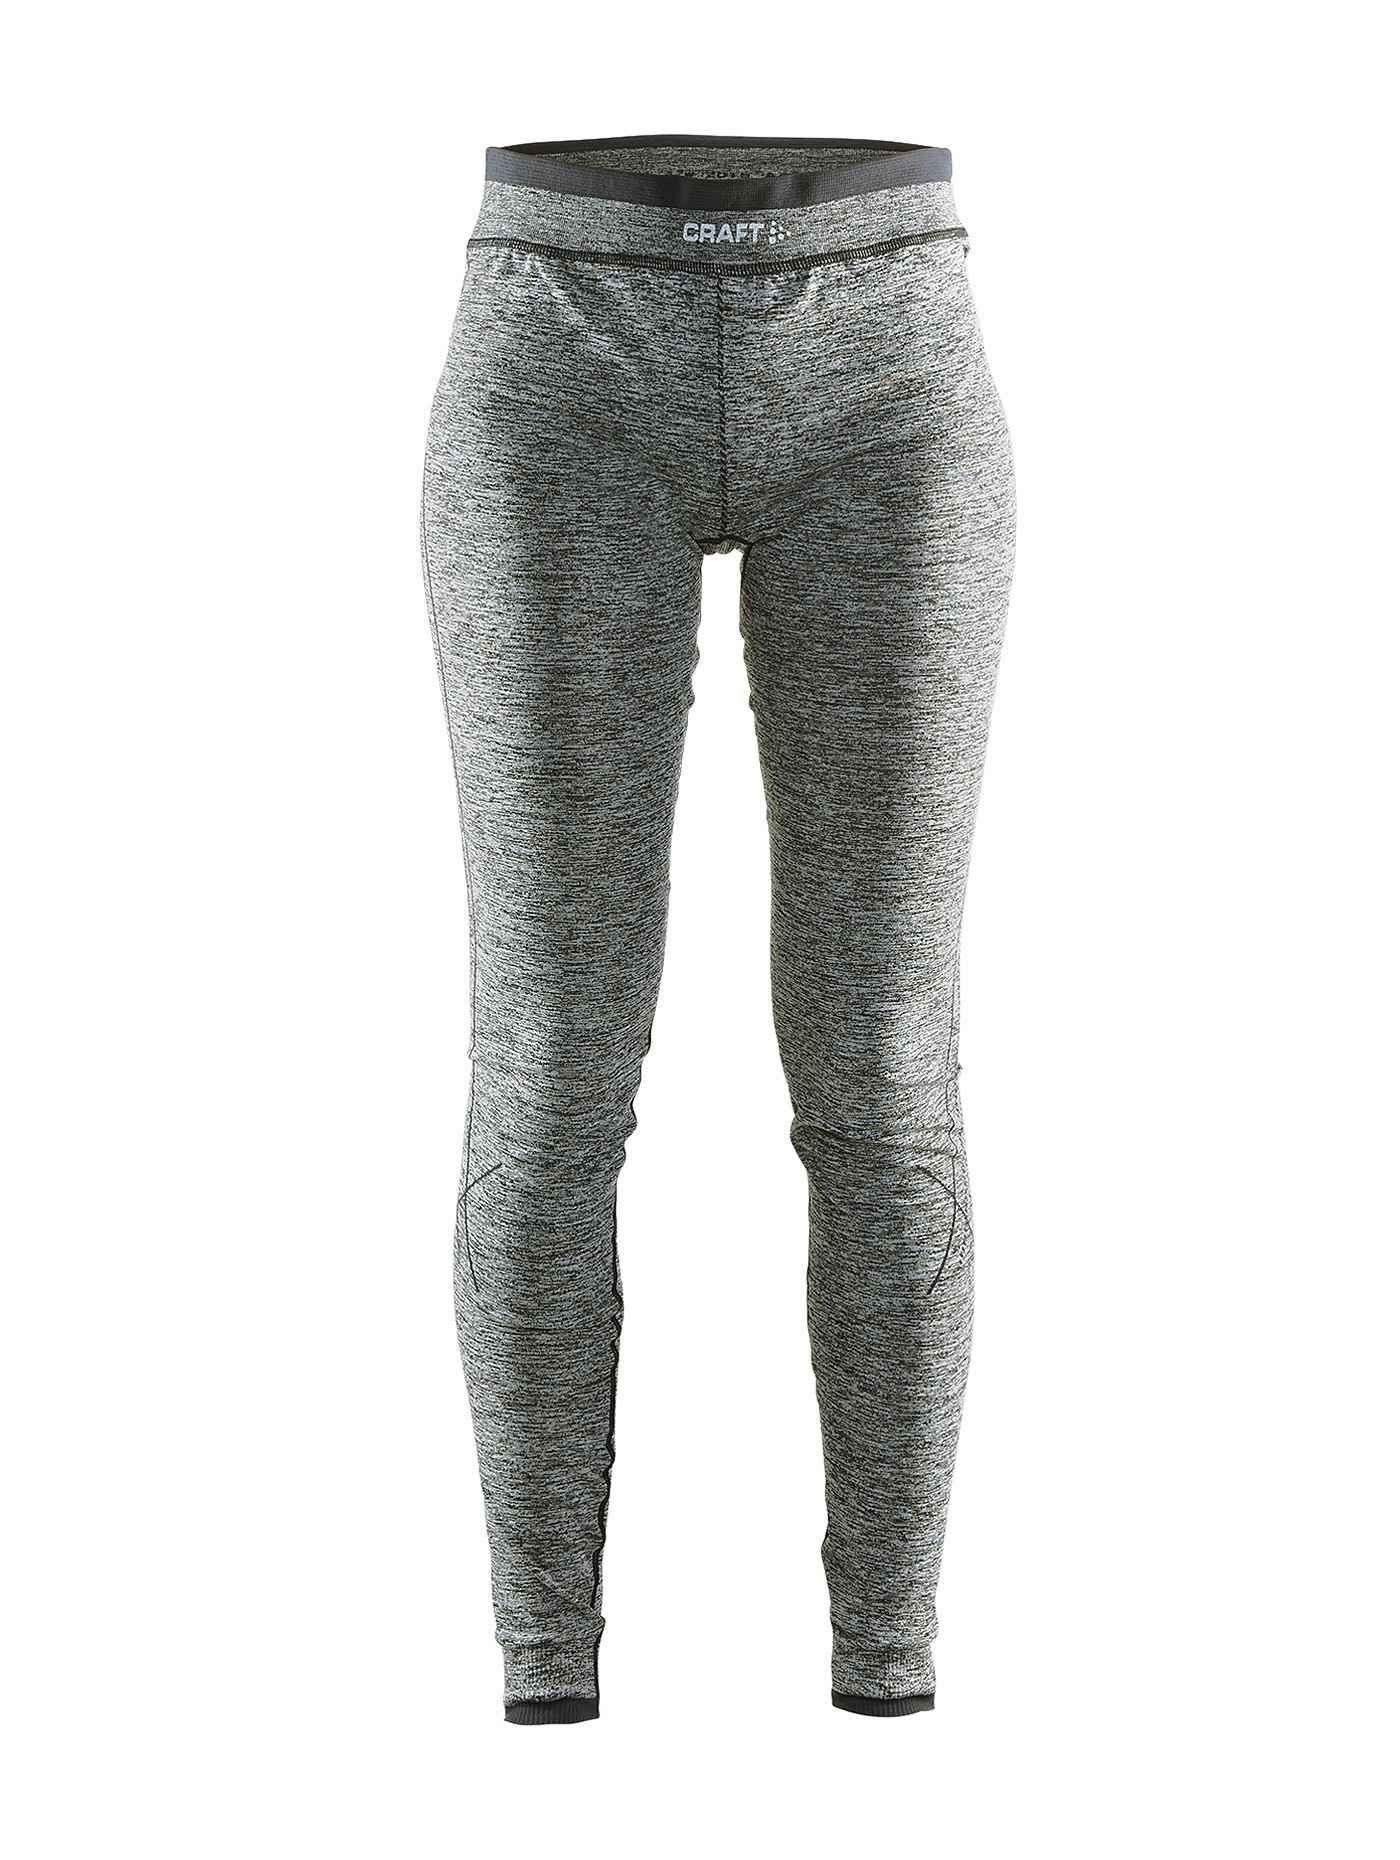 Craft Active Comfort Pants Schwarz- Female Softshellhosen- Grsse XS - Farbe Black